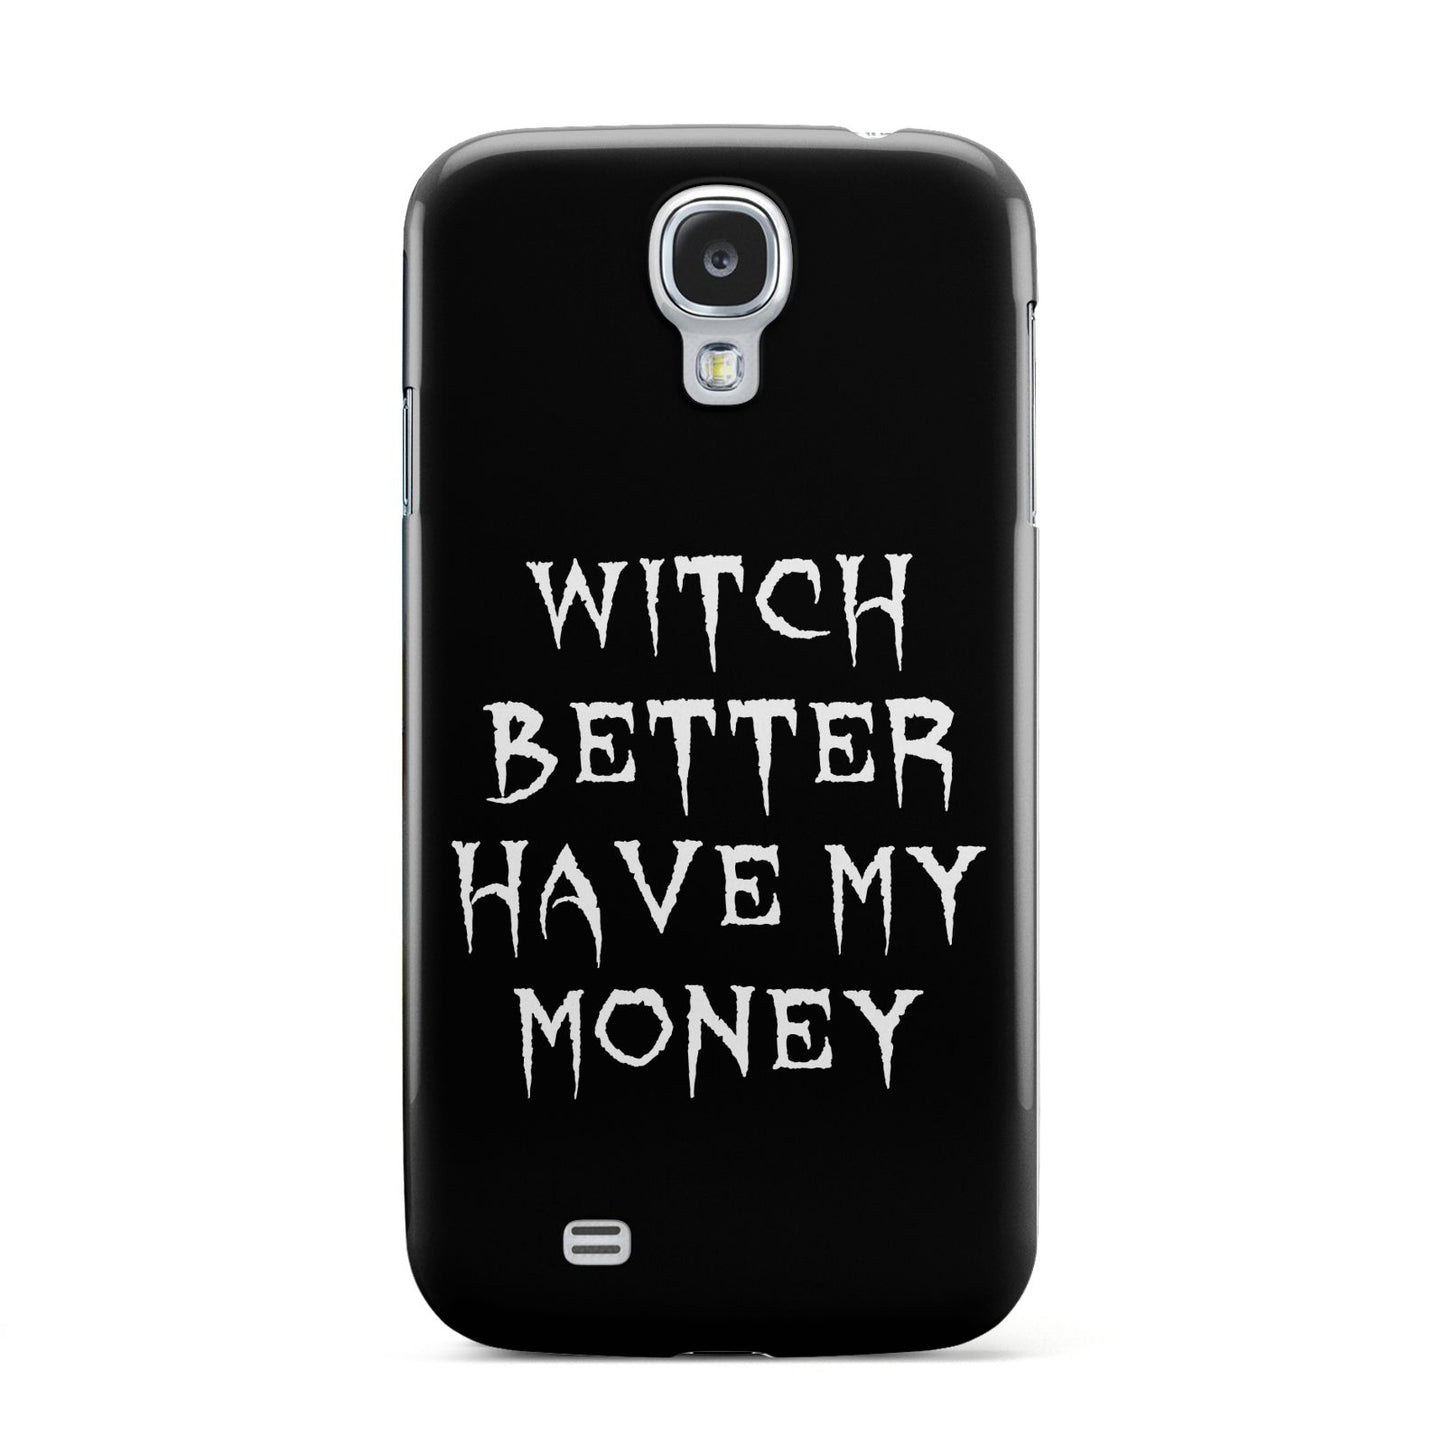 Witch Better Have My Money Samsung Galaxy S4 Case